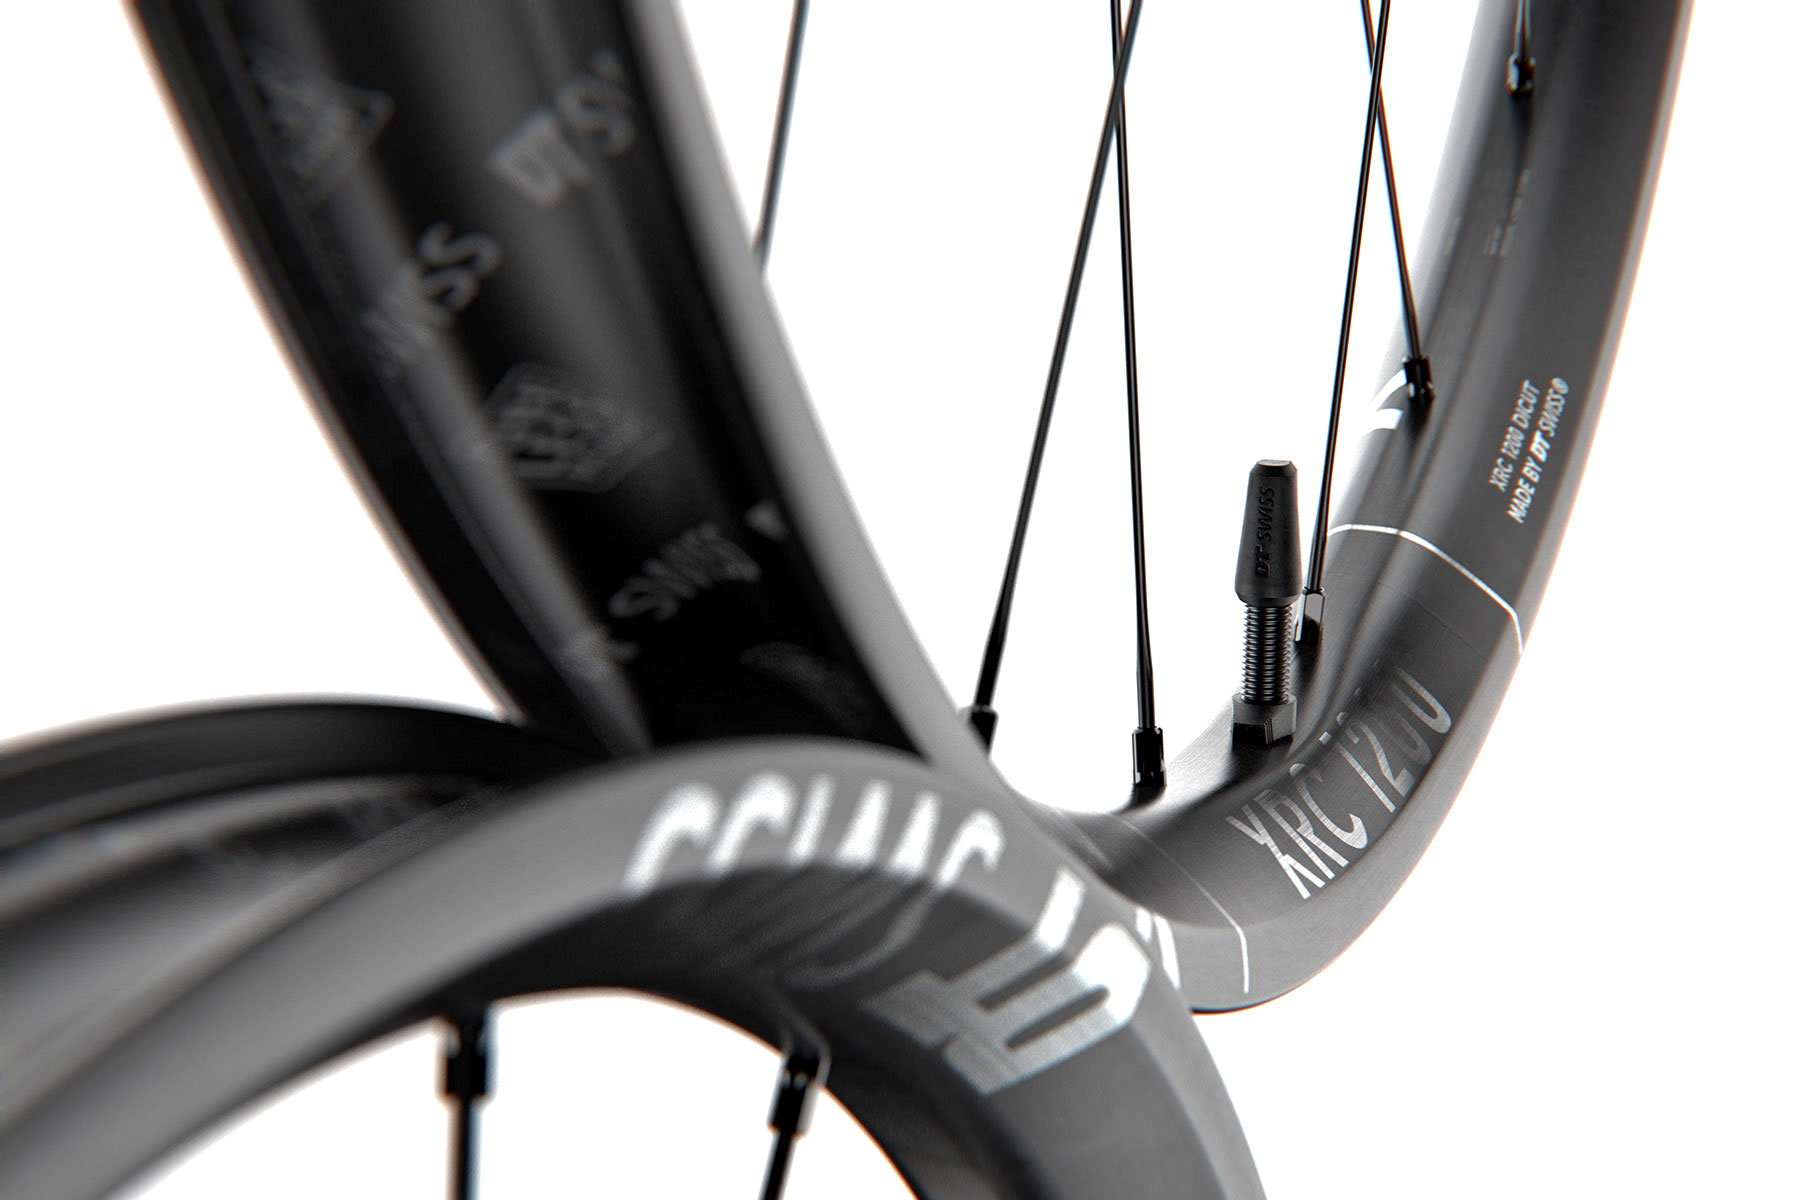 DT Swiss 1200 series all-new lightweight carbon mountain bike wheels, raw rim detail